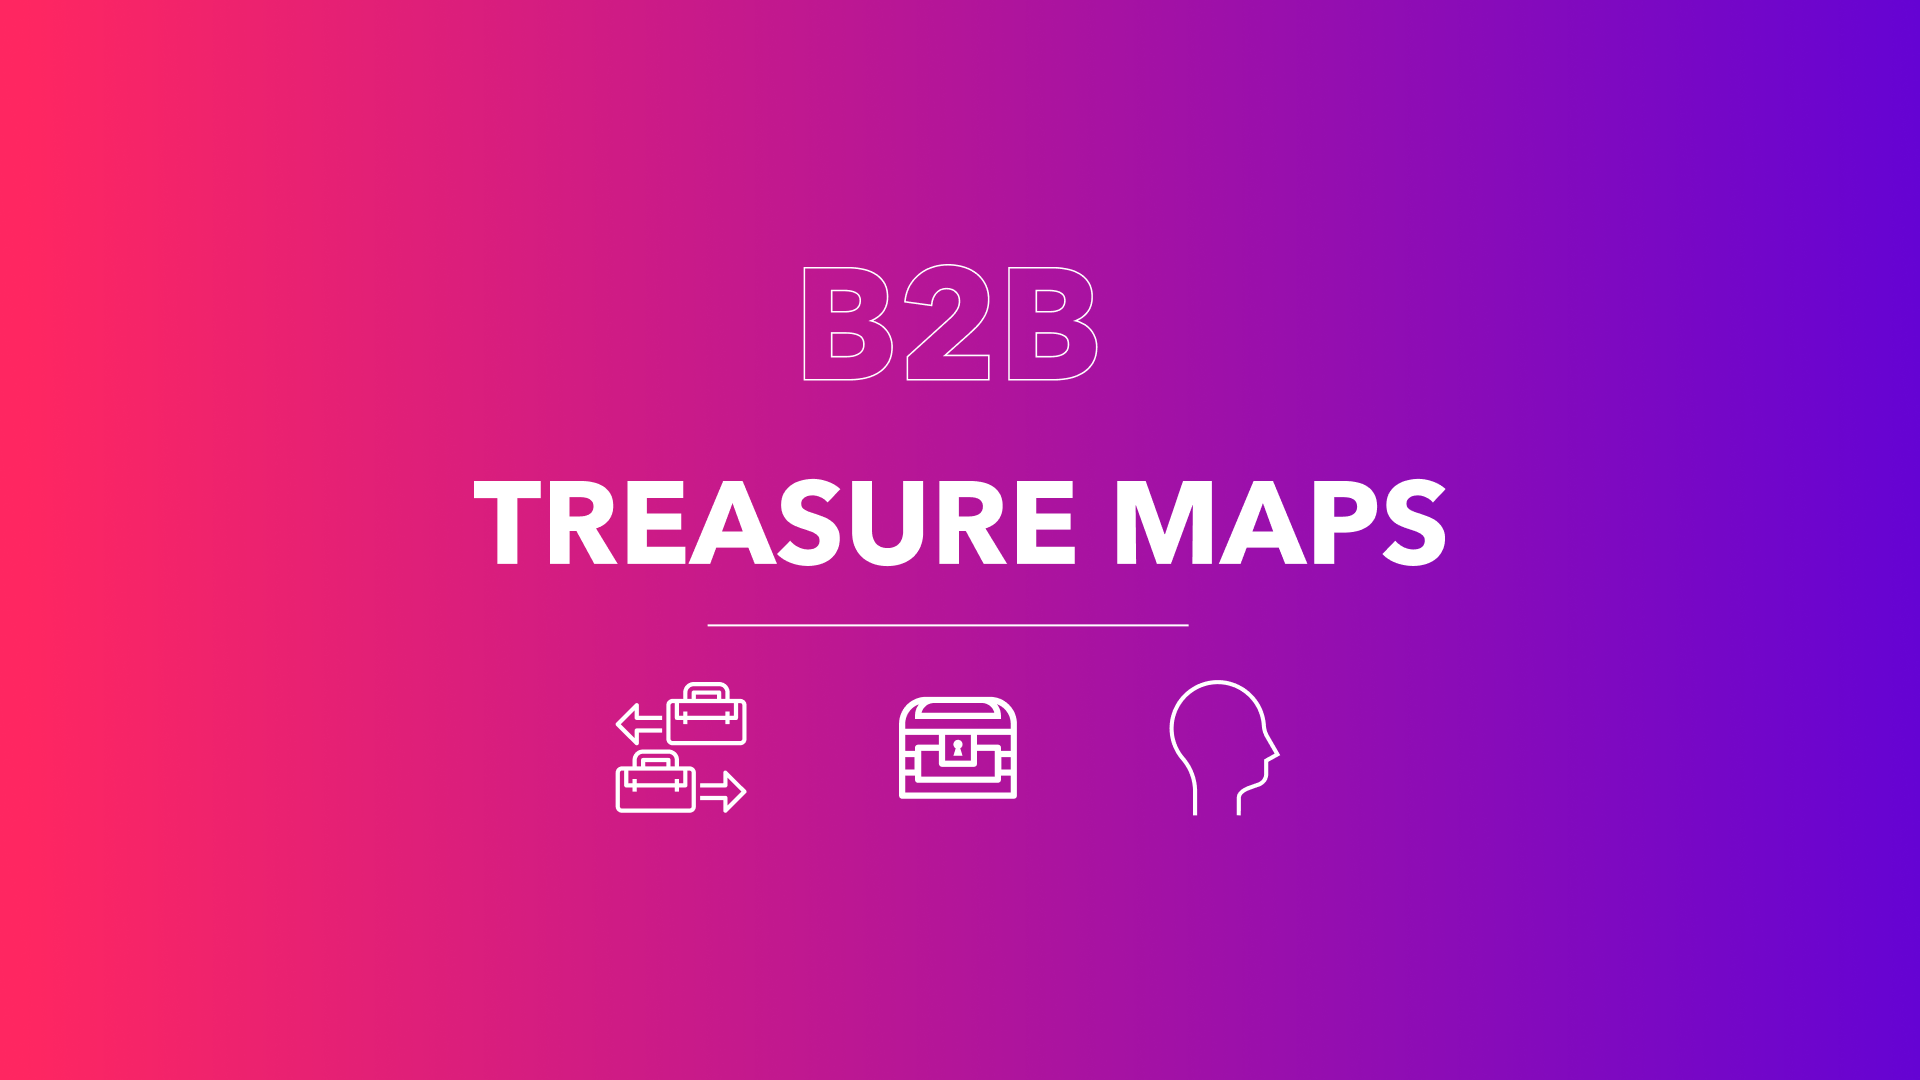 X Marks the Spot: Use B2B Personas, B2B Customer Journey Maps and Service Blueprints to Find B2B Treasure